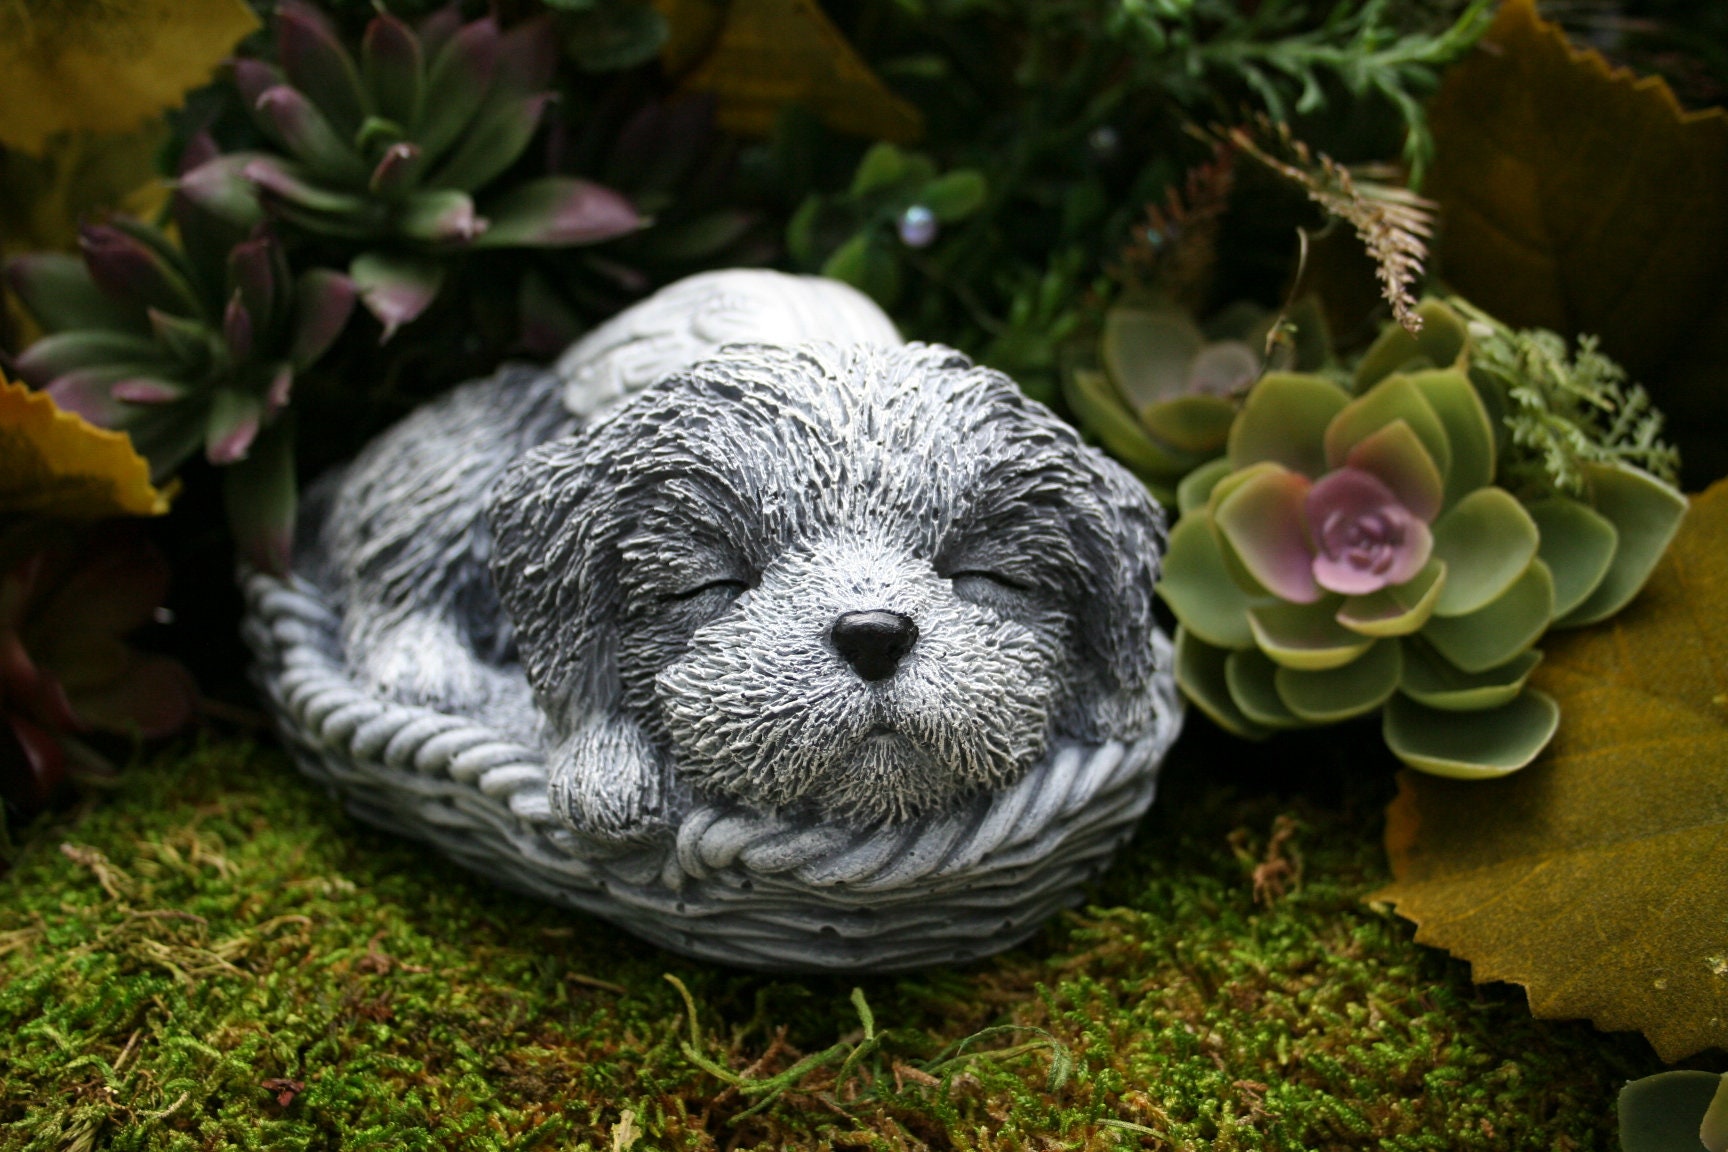 Shih Tzu Shitzu Sleeping Angel Wing Animal Pet Dog Farmhouse Car Ornam -  OhaPrints